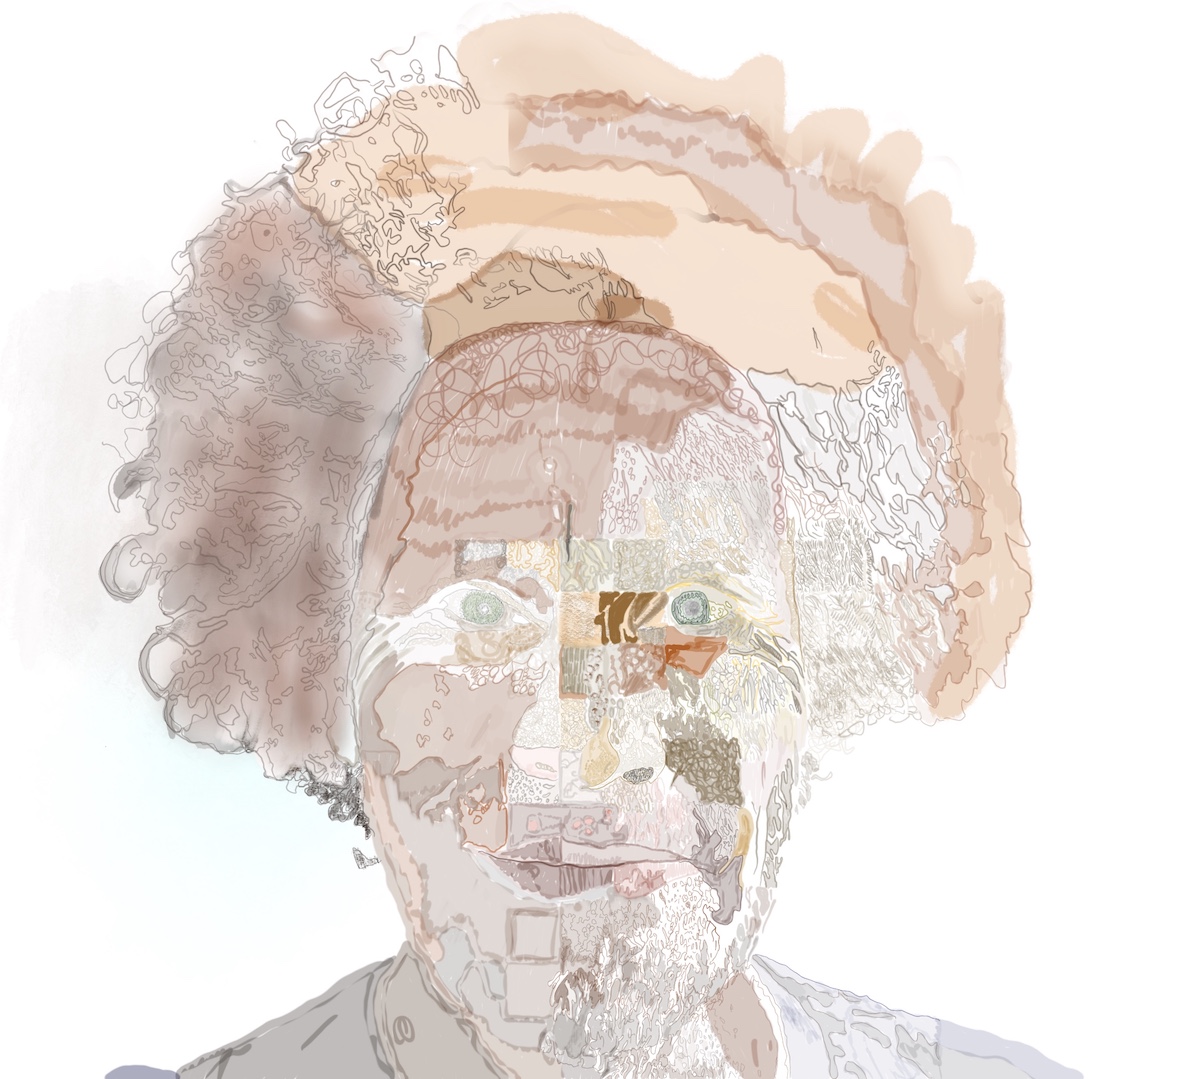 Michael Tarnoff self-portrait in the style of Chuck Close